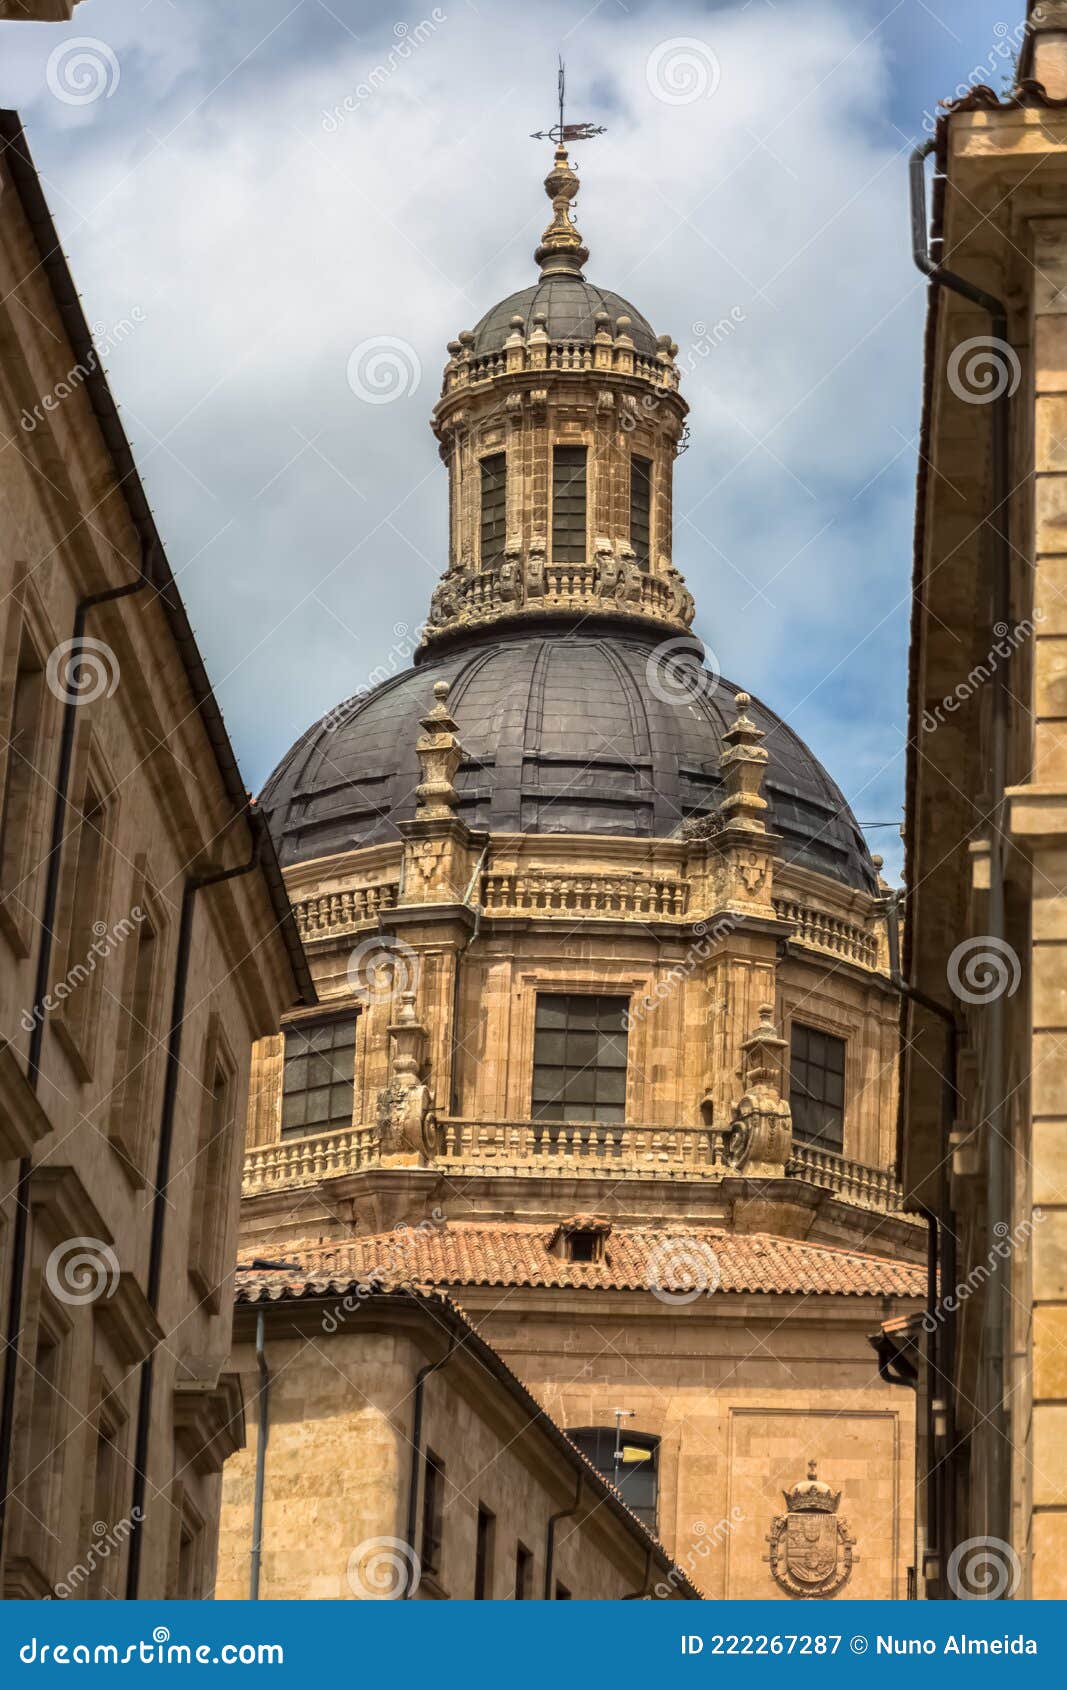 view of a baroque iconic dome copula at the la clerecia building, pontifical university at salamanca, universidad pontificia de